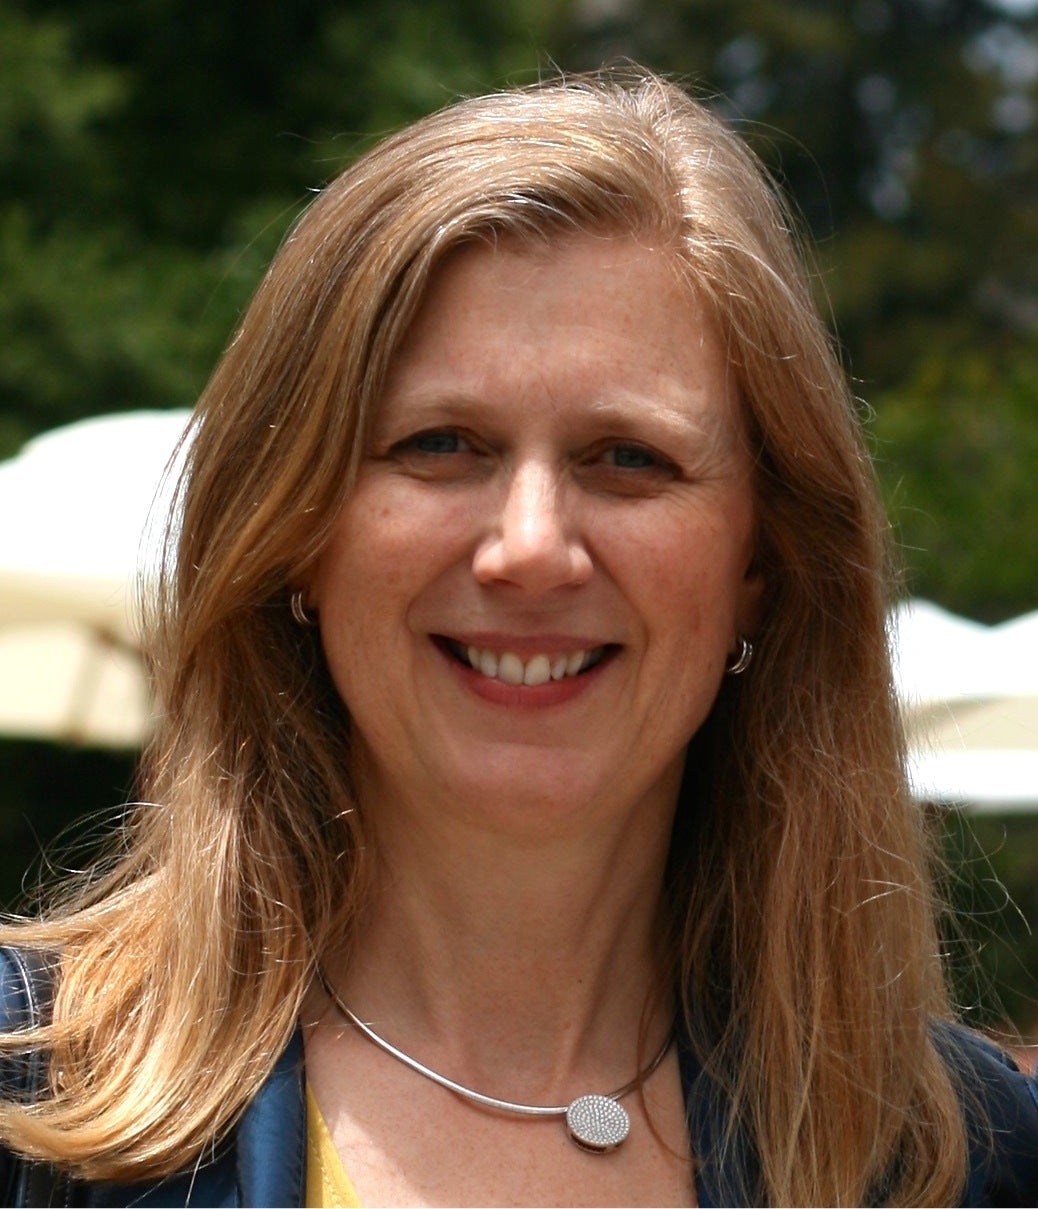 Dr. Kathy Dumbleton